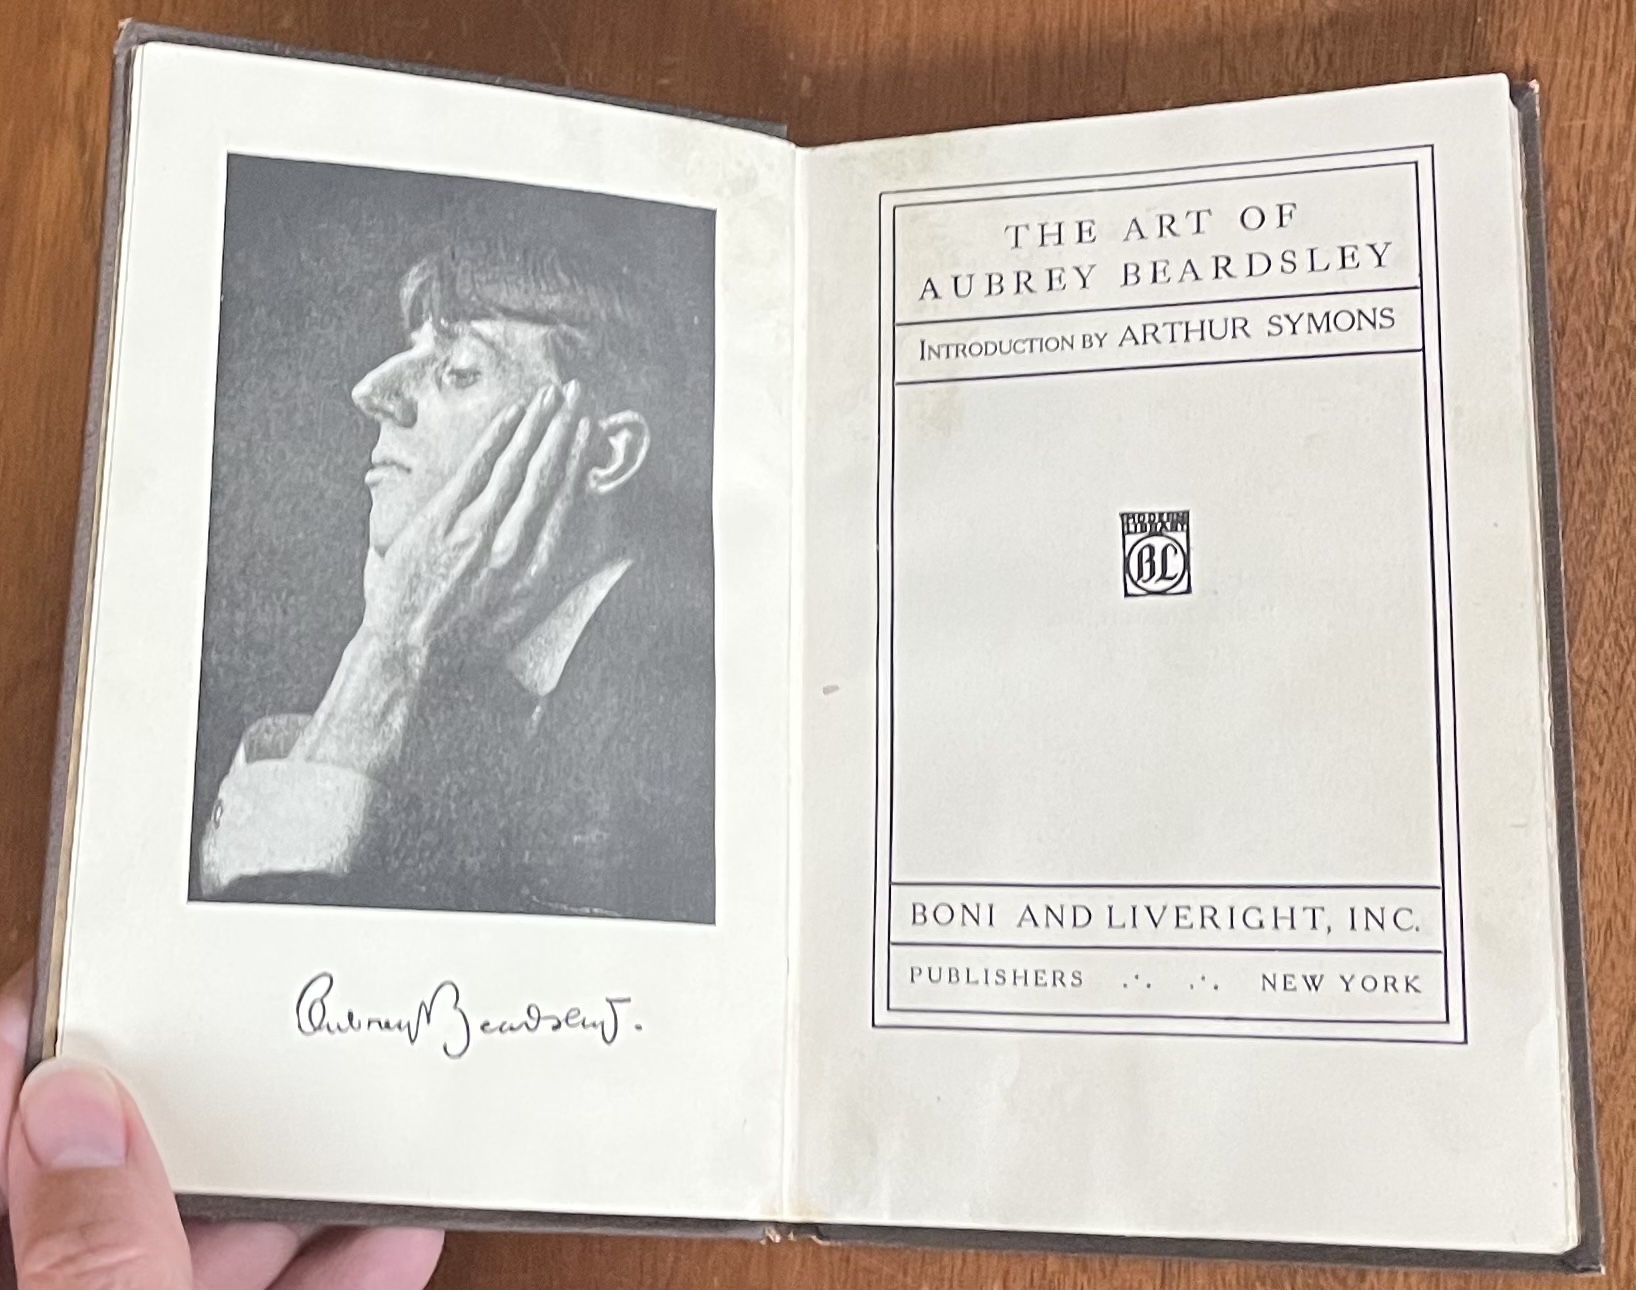 The Art of Aubrey Beardsley **FIRST MODERN LIBRARY EDITION 1918** by  Beardsley, Aubrey; Arthur Symons (Introduction): Good Hardcover (1918) 1st  Edition